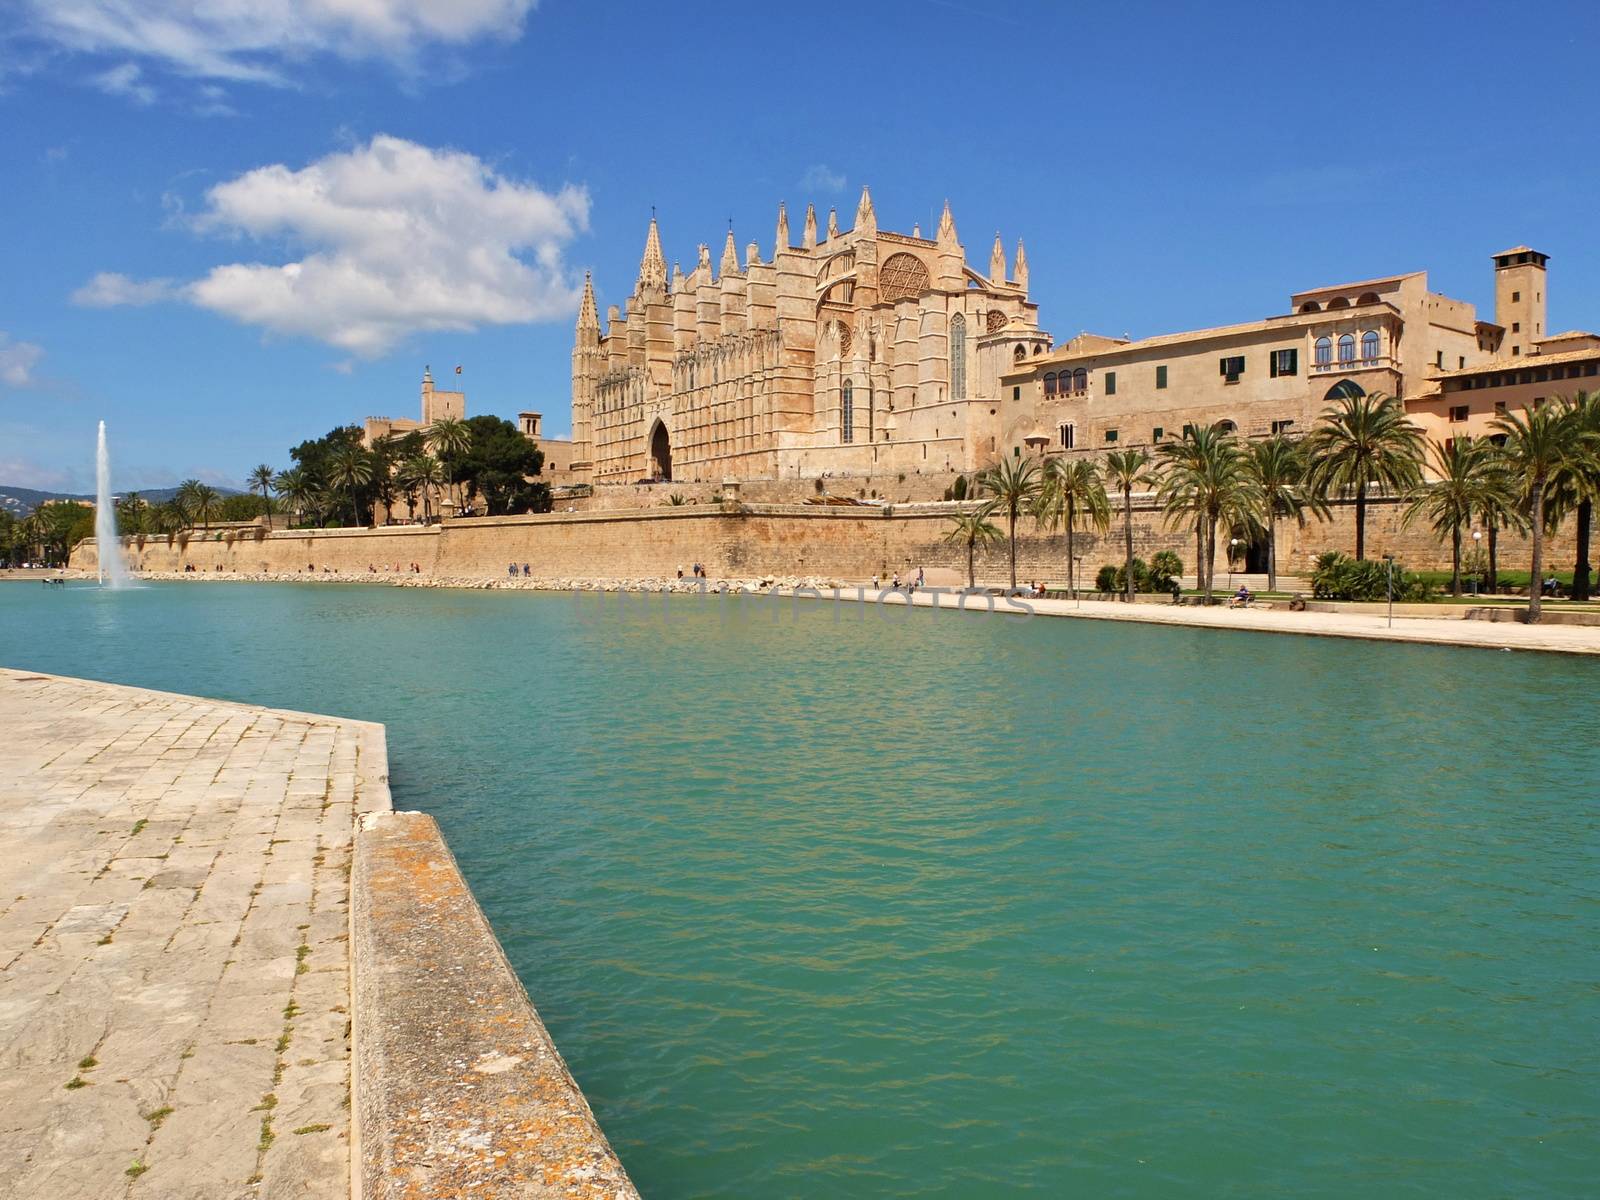 Cathedral of la Seu Mallorca by antenacarnidlo